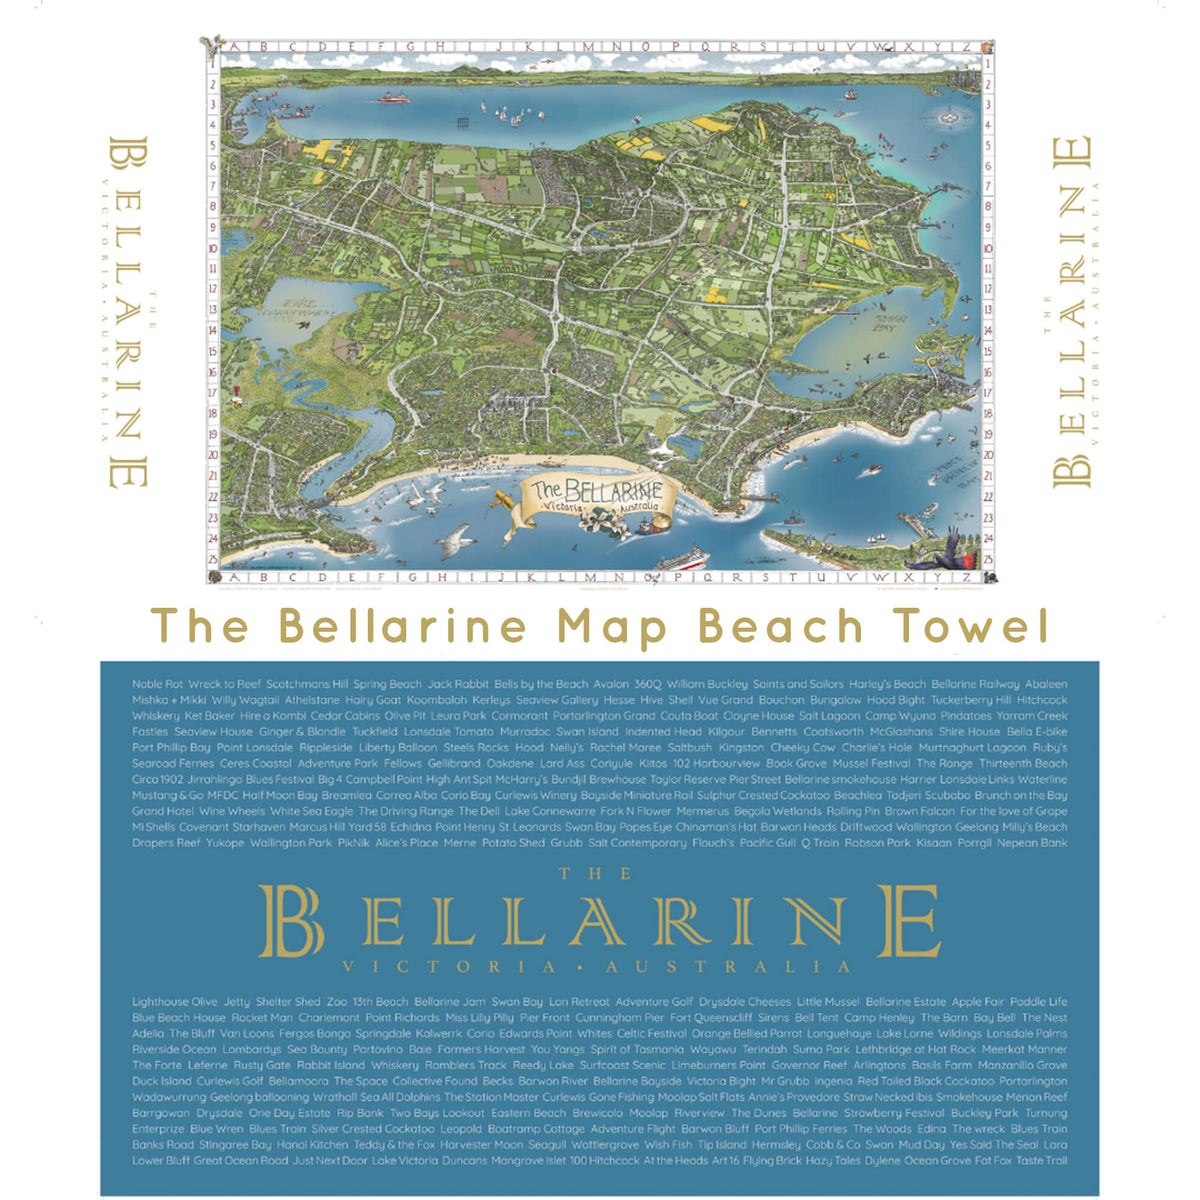 The Bellarine Map Beach Towel